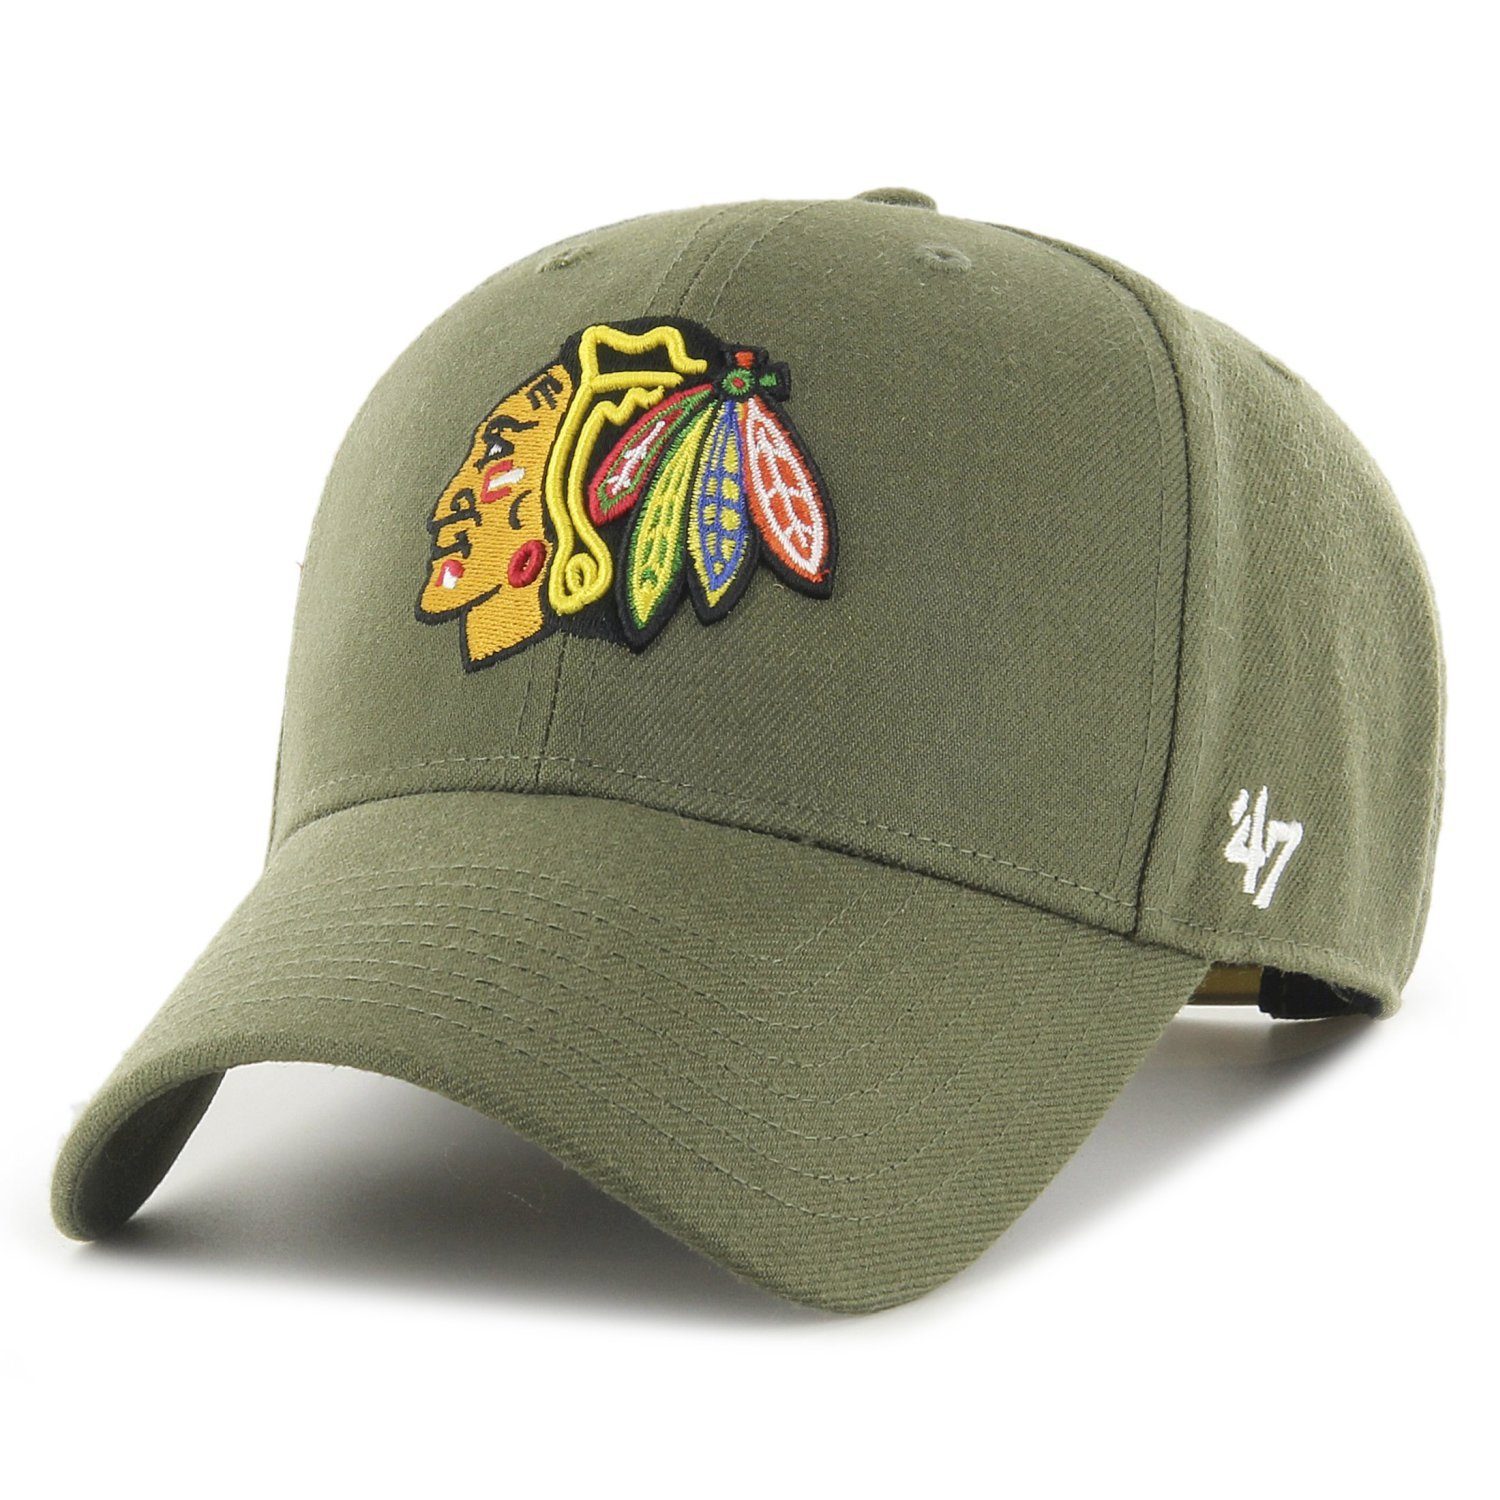 NHL Blackhawks Brand Snapback Cap '47 Chicago